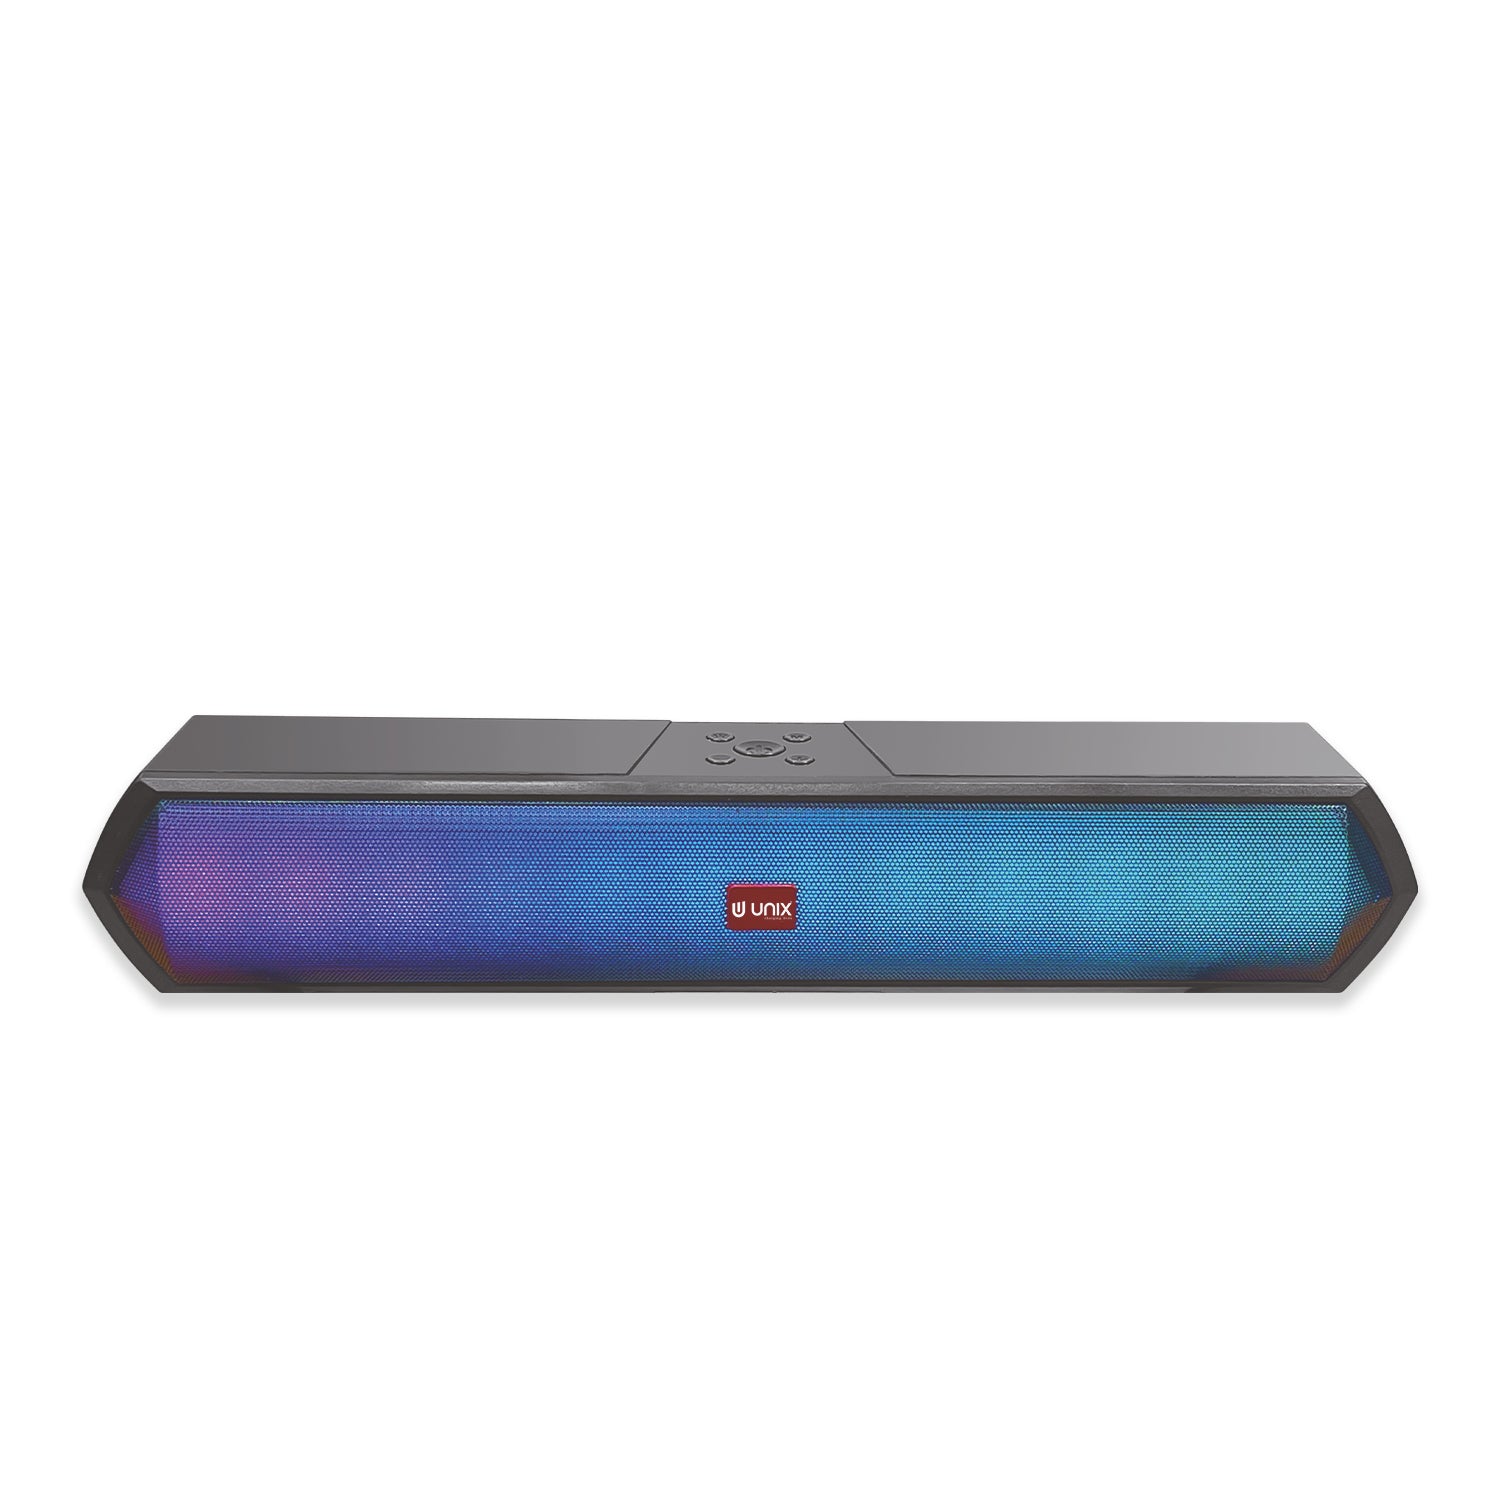 Unix XB-U77 Megabass Soundbar Wireless Speaker - High-Fidelity Audio & RGB Lighting